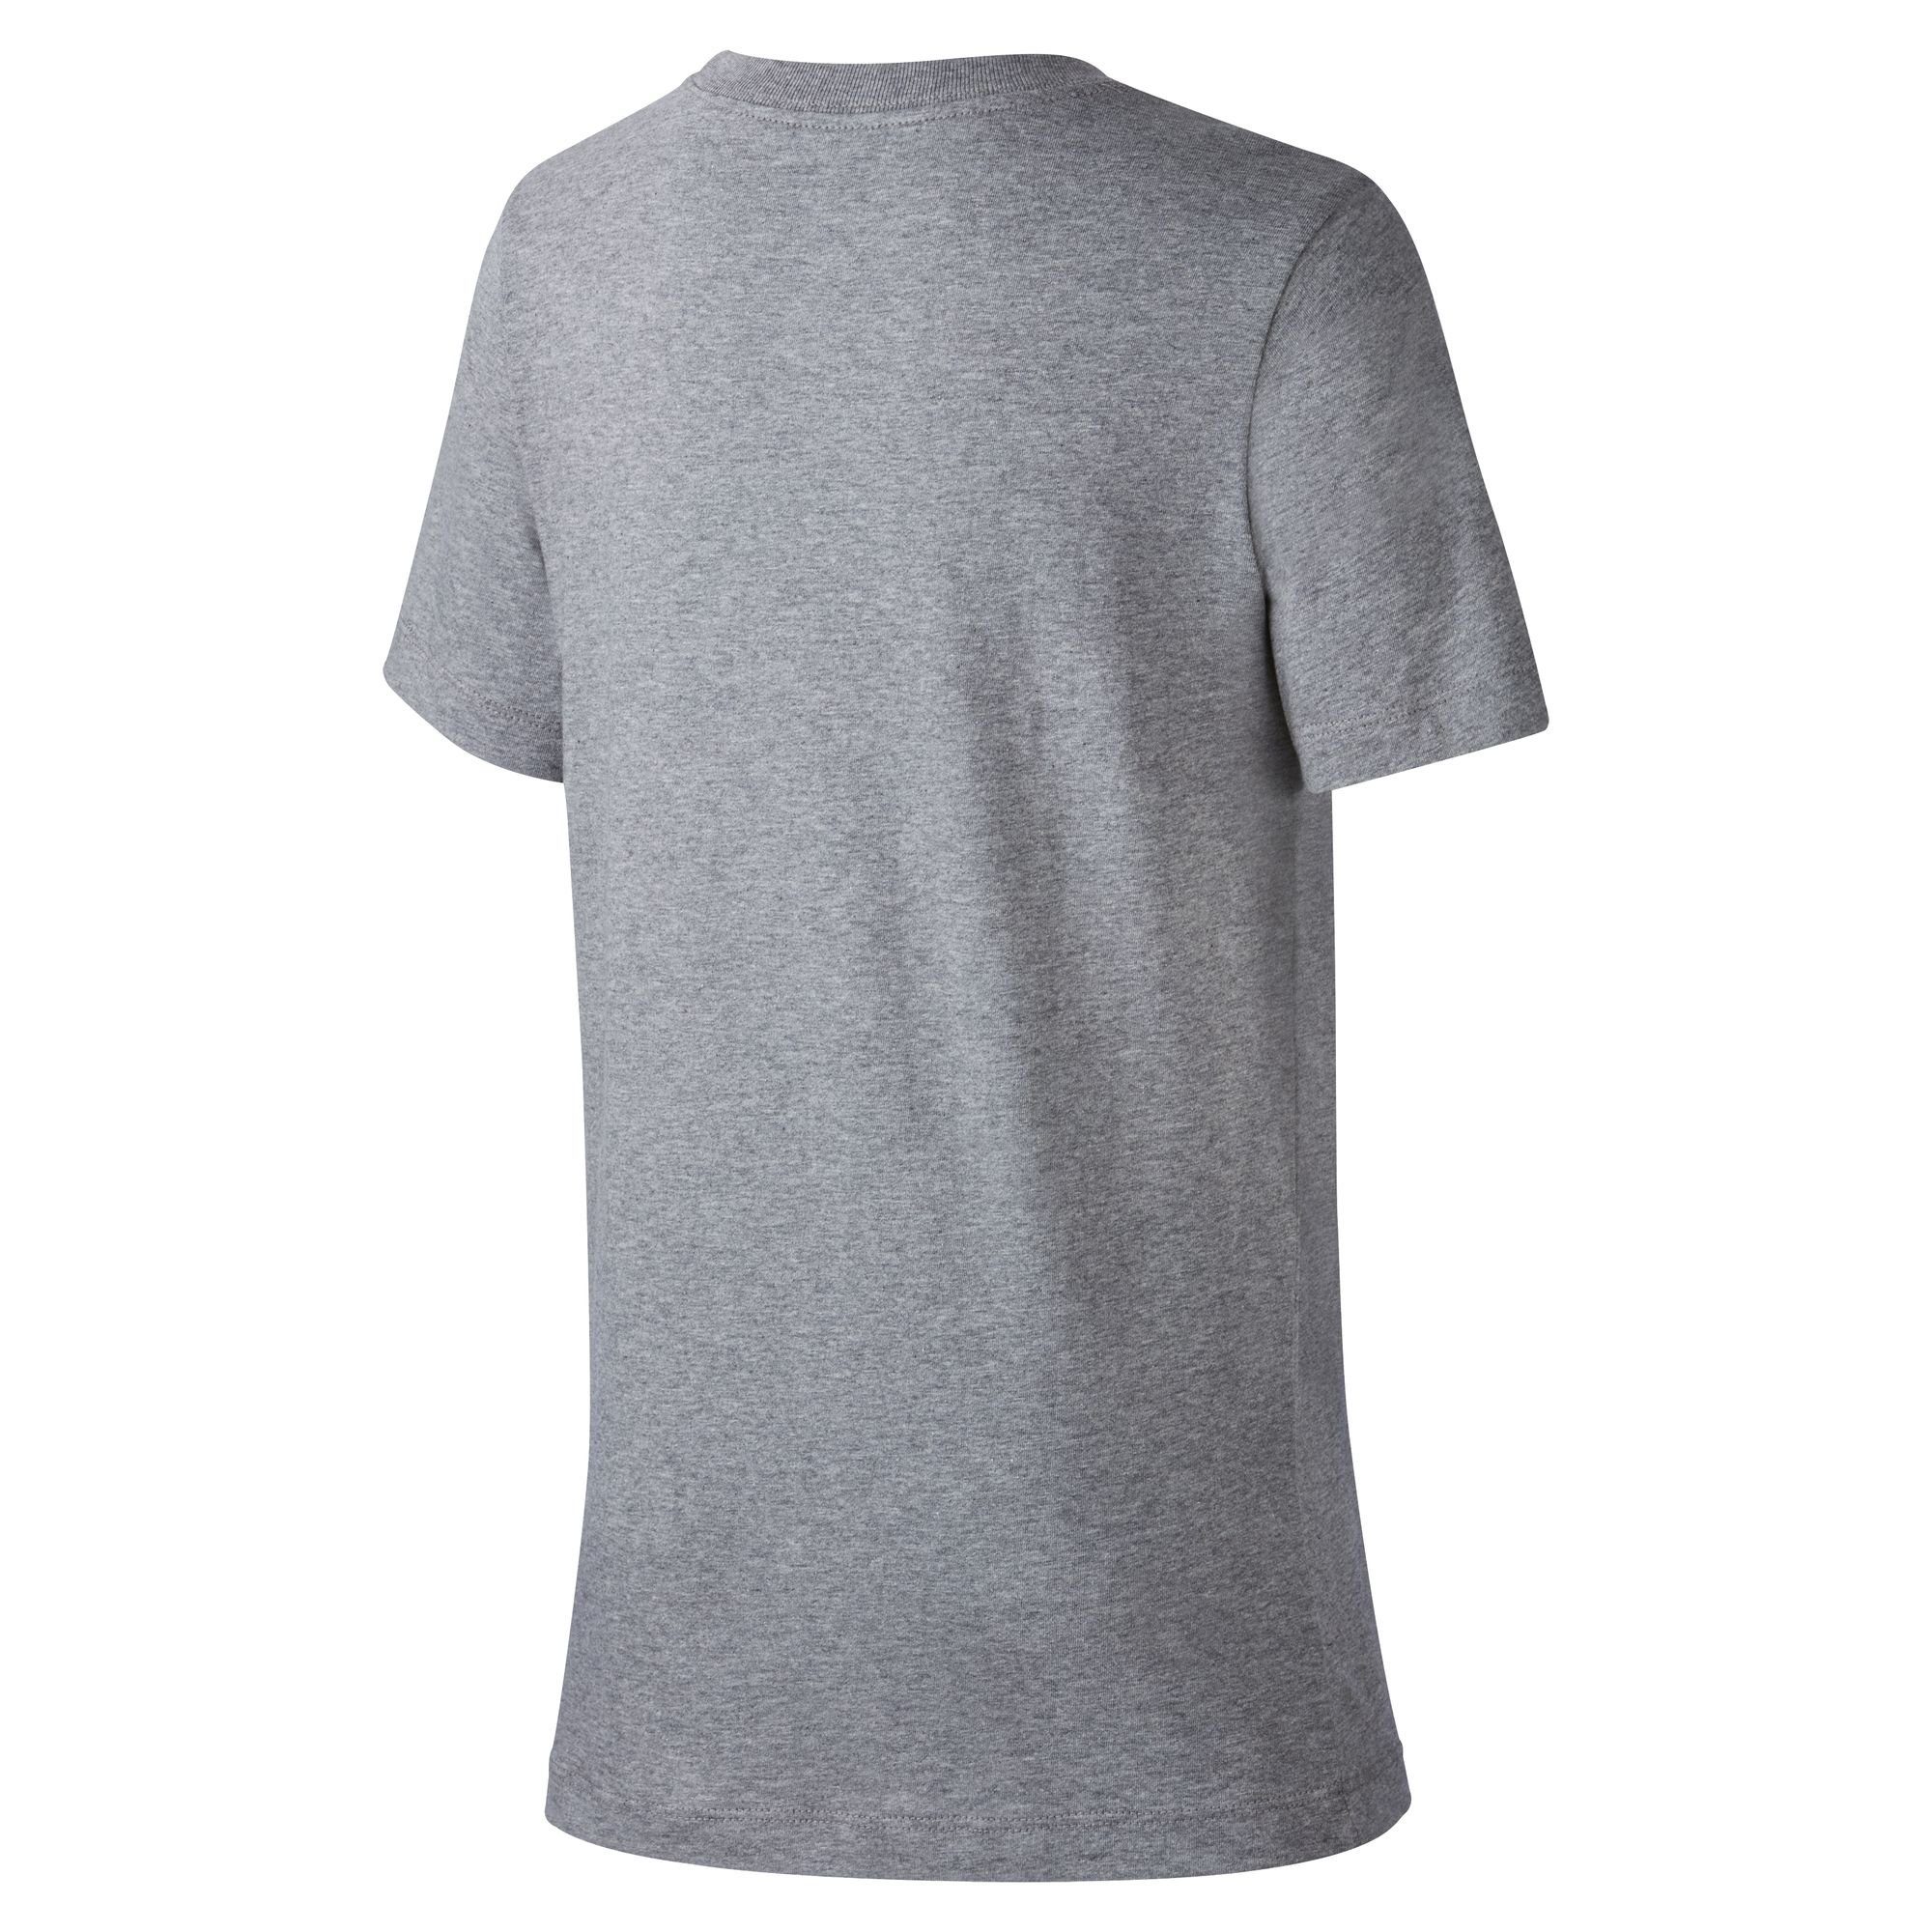 Nike KIDS' grau-meliert T-SHIRT T-Shirt Sportswear BIG COTTON